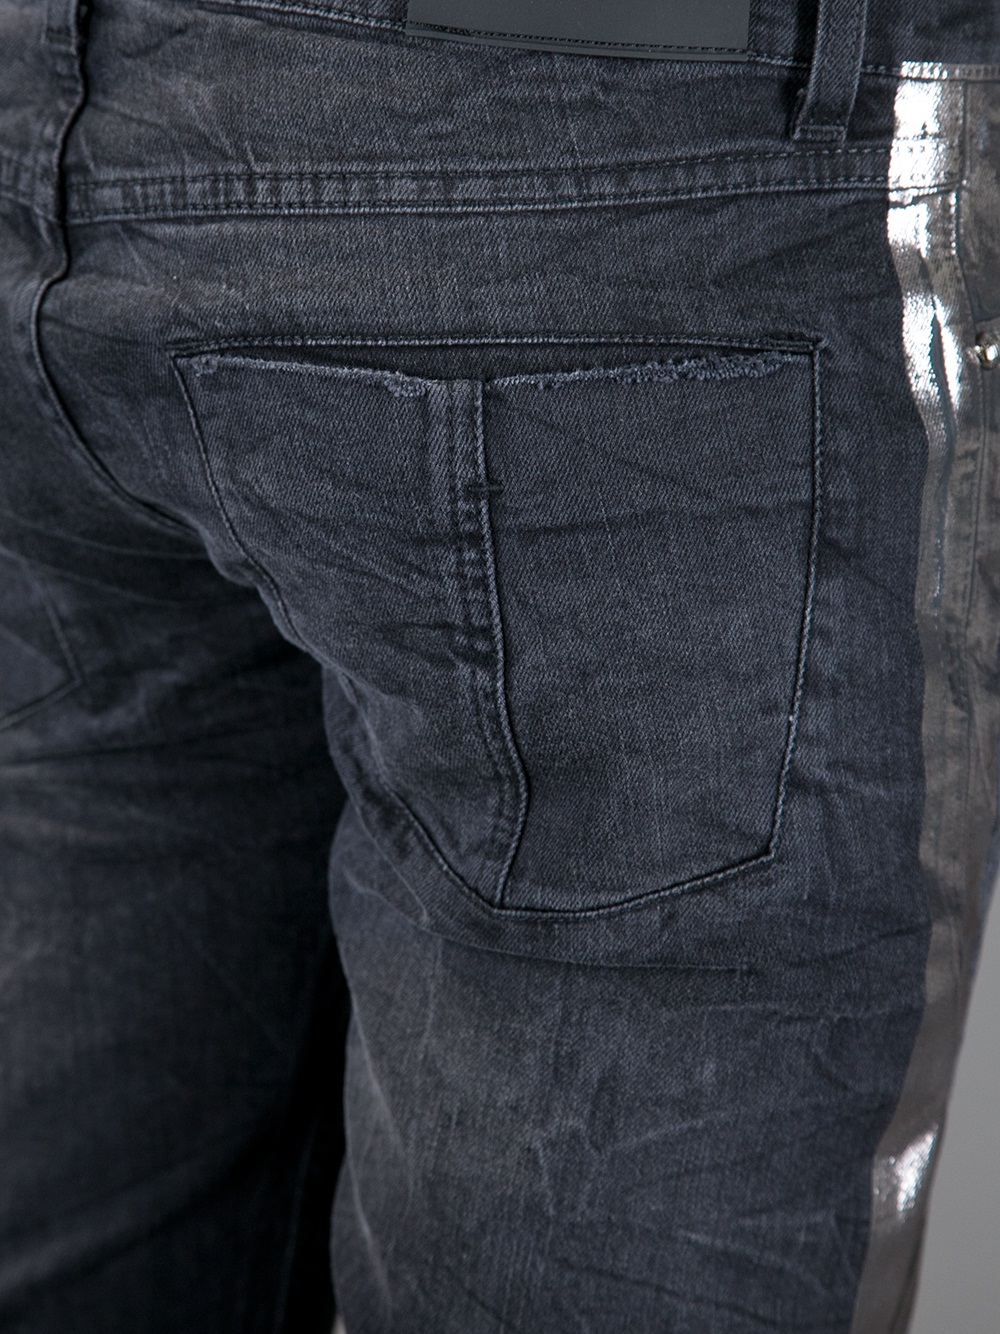 Karl Lagerfeld Slim Fit Jean in Black for Men - Lyst